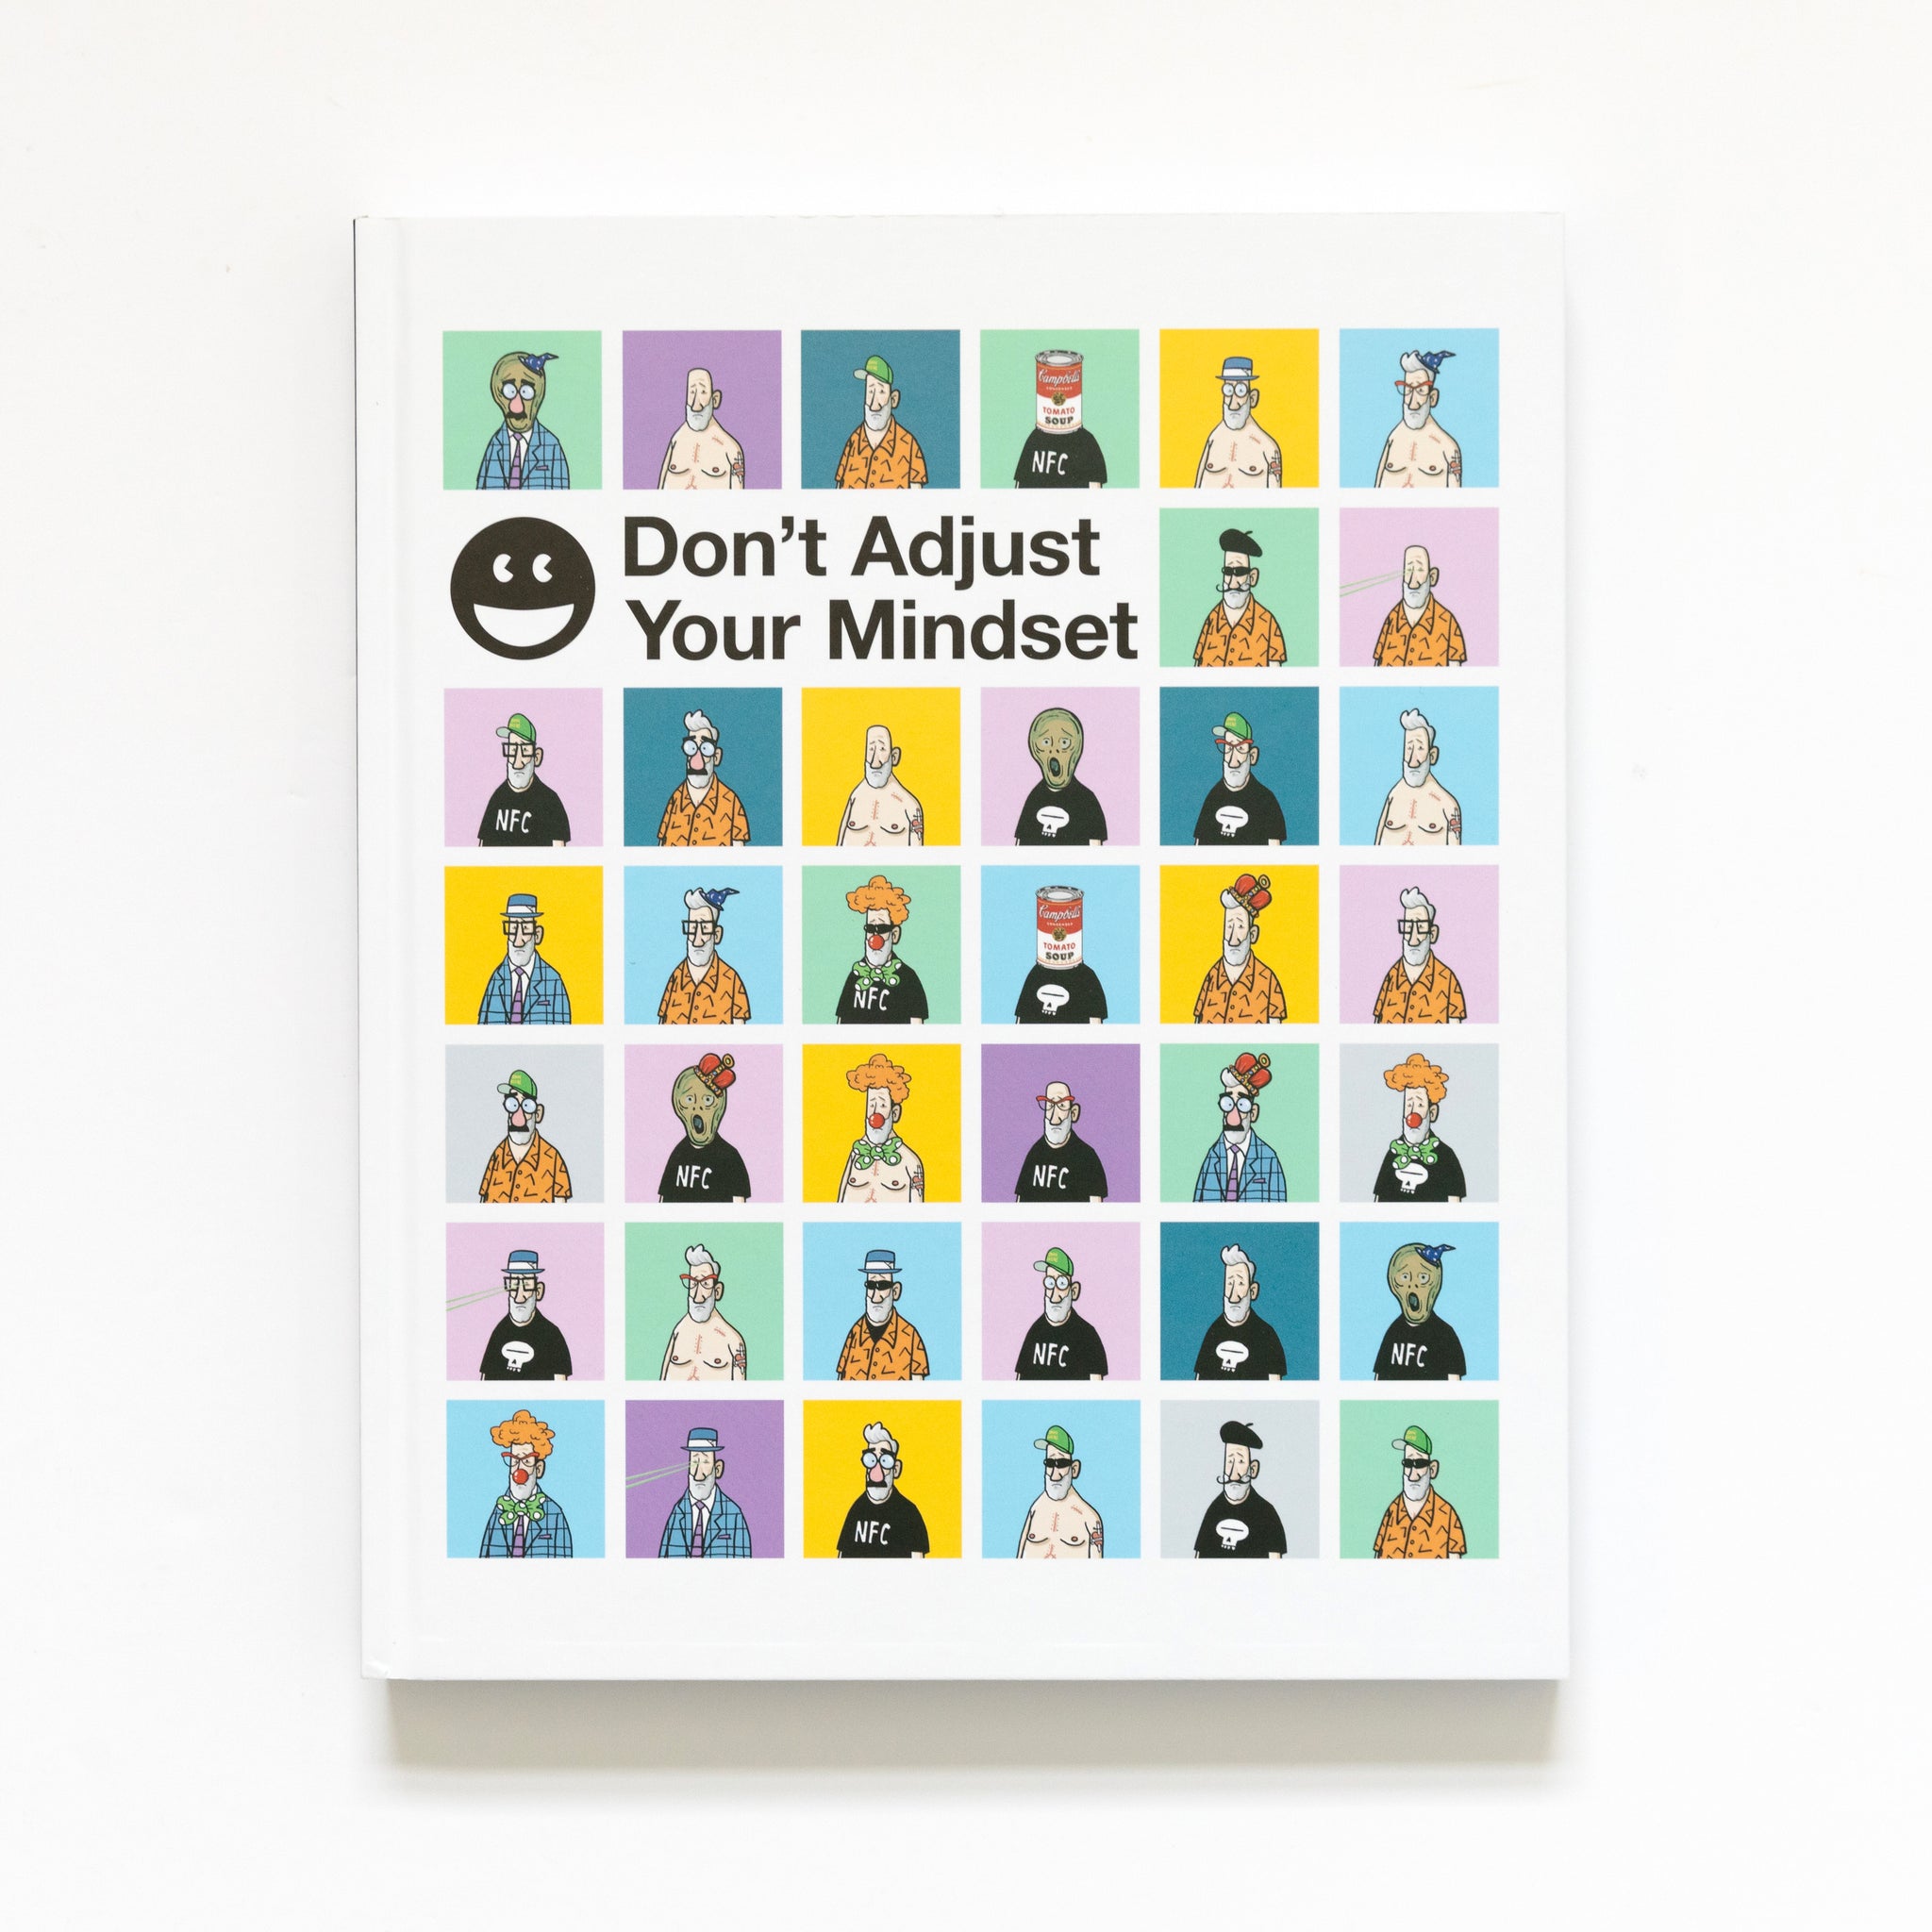 Don't Adjust Your Mindset exhibition book